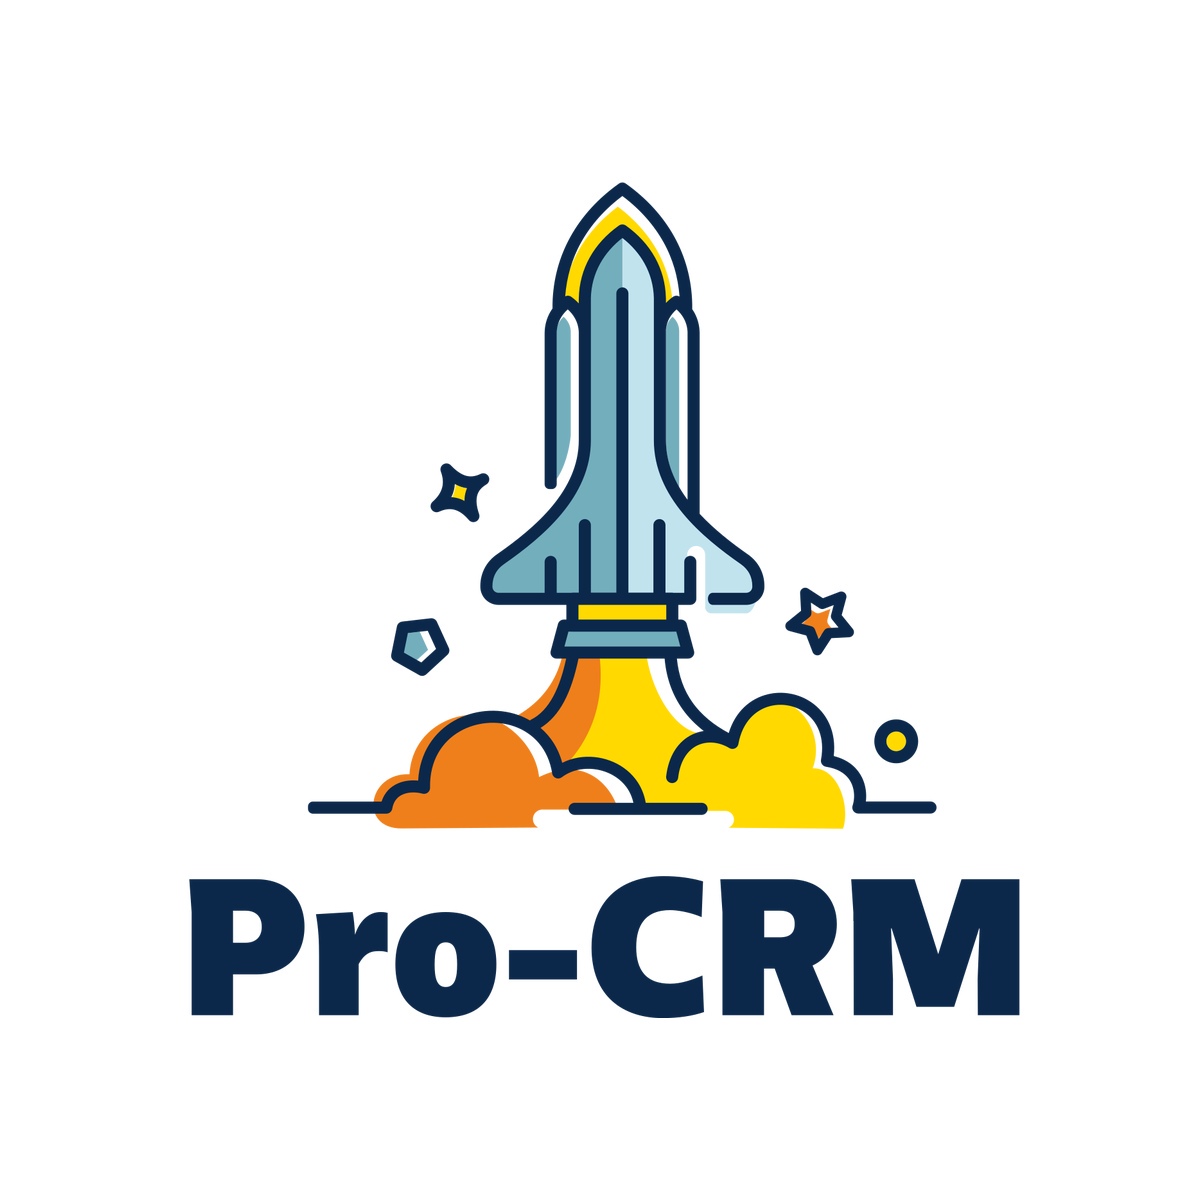 Pro-CRM